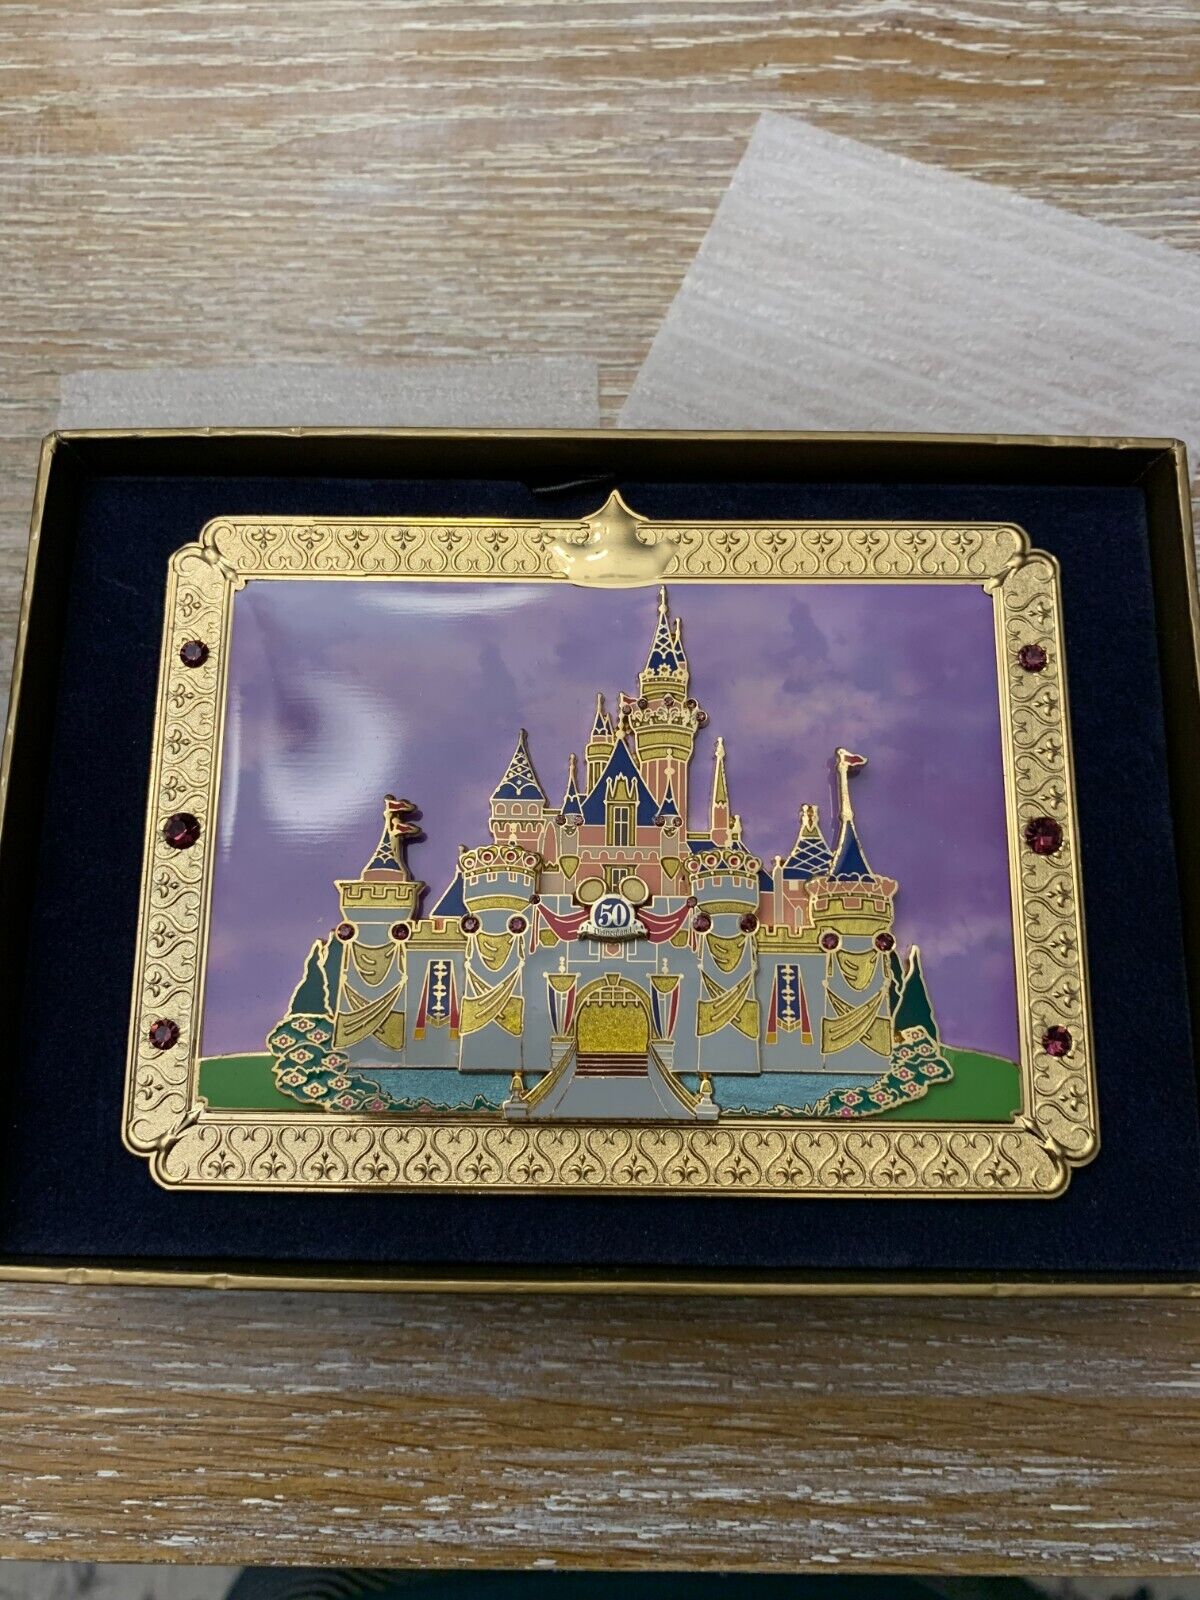 2005 Disneyland Jeweled Layered Castle celebrating 50th Anniversary Le pin 